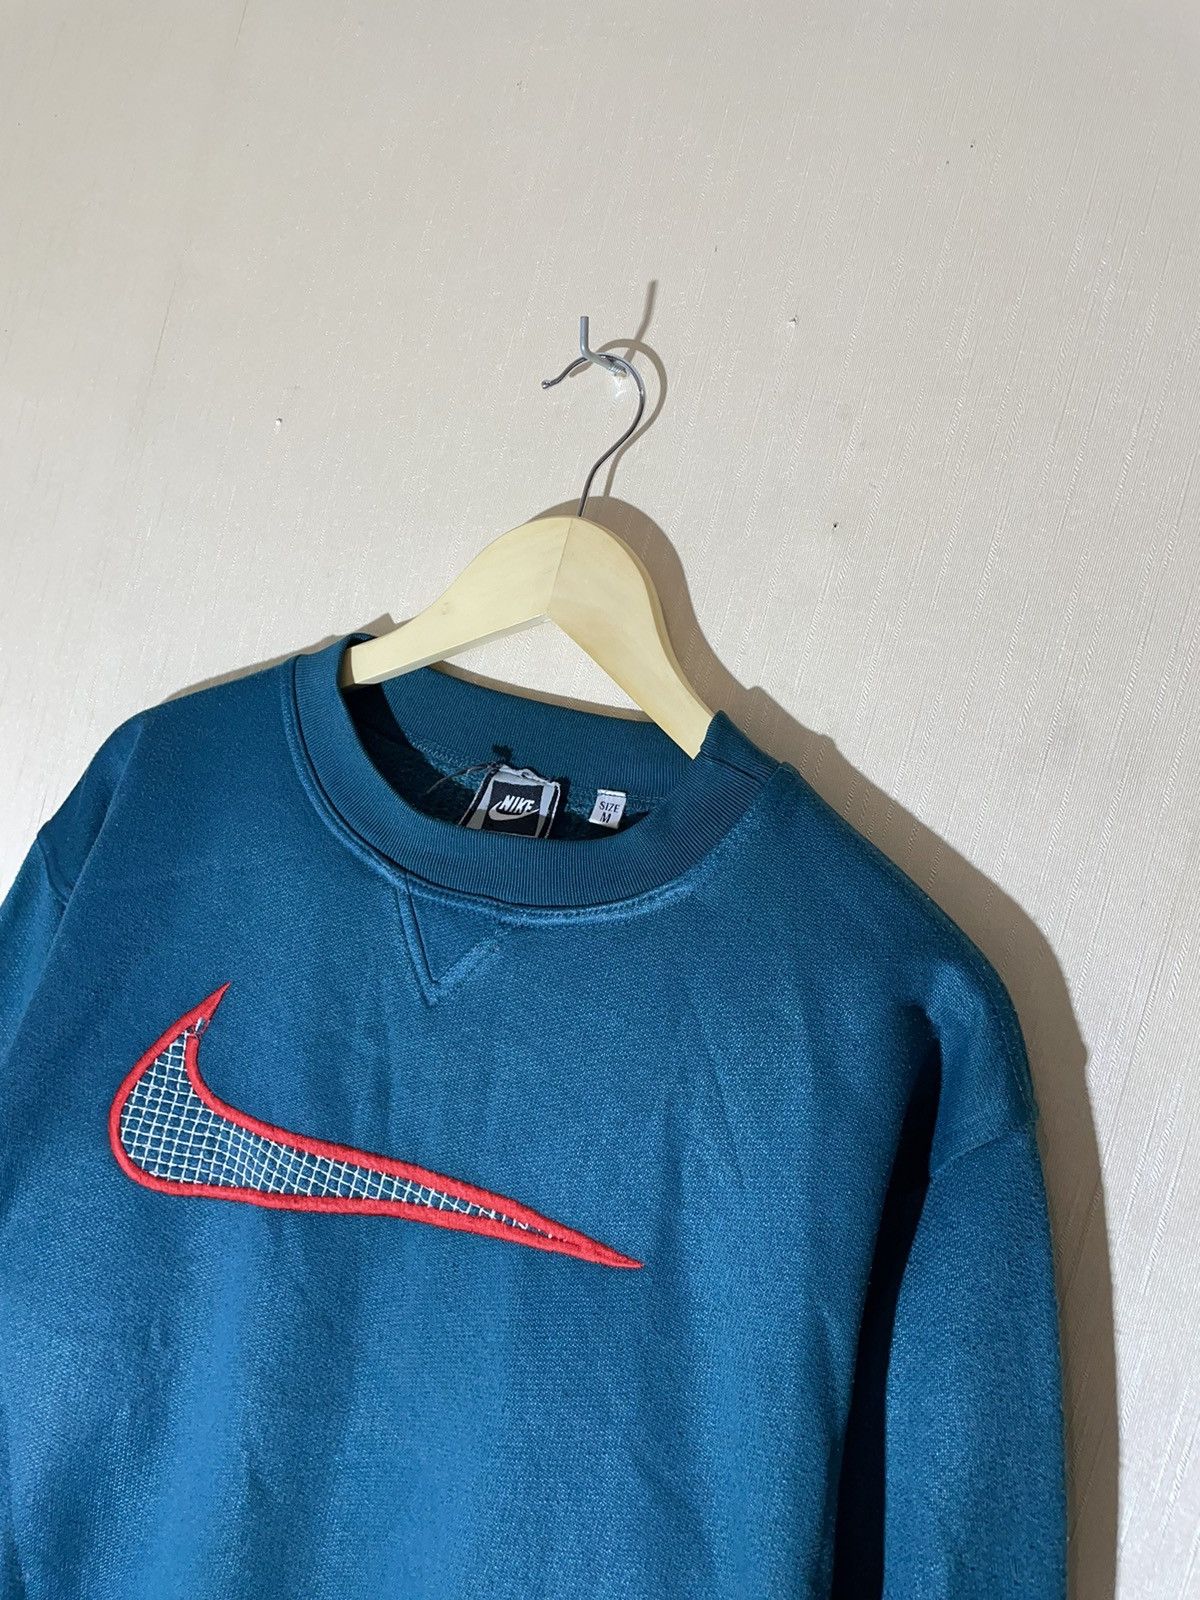 Nike Nike vintage y2k sweatshirt 80-90s Size US M / EU 48-50 / 2 - 2 Preview